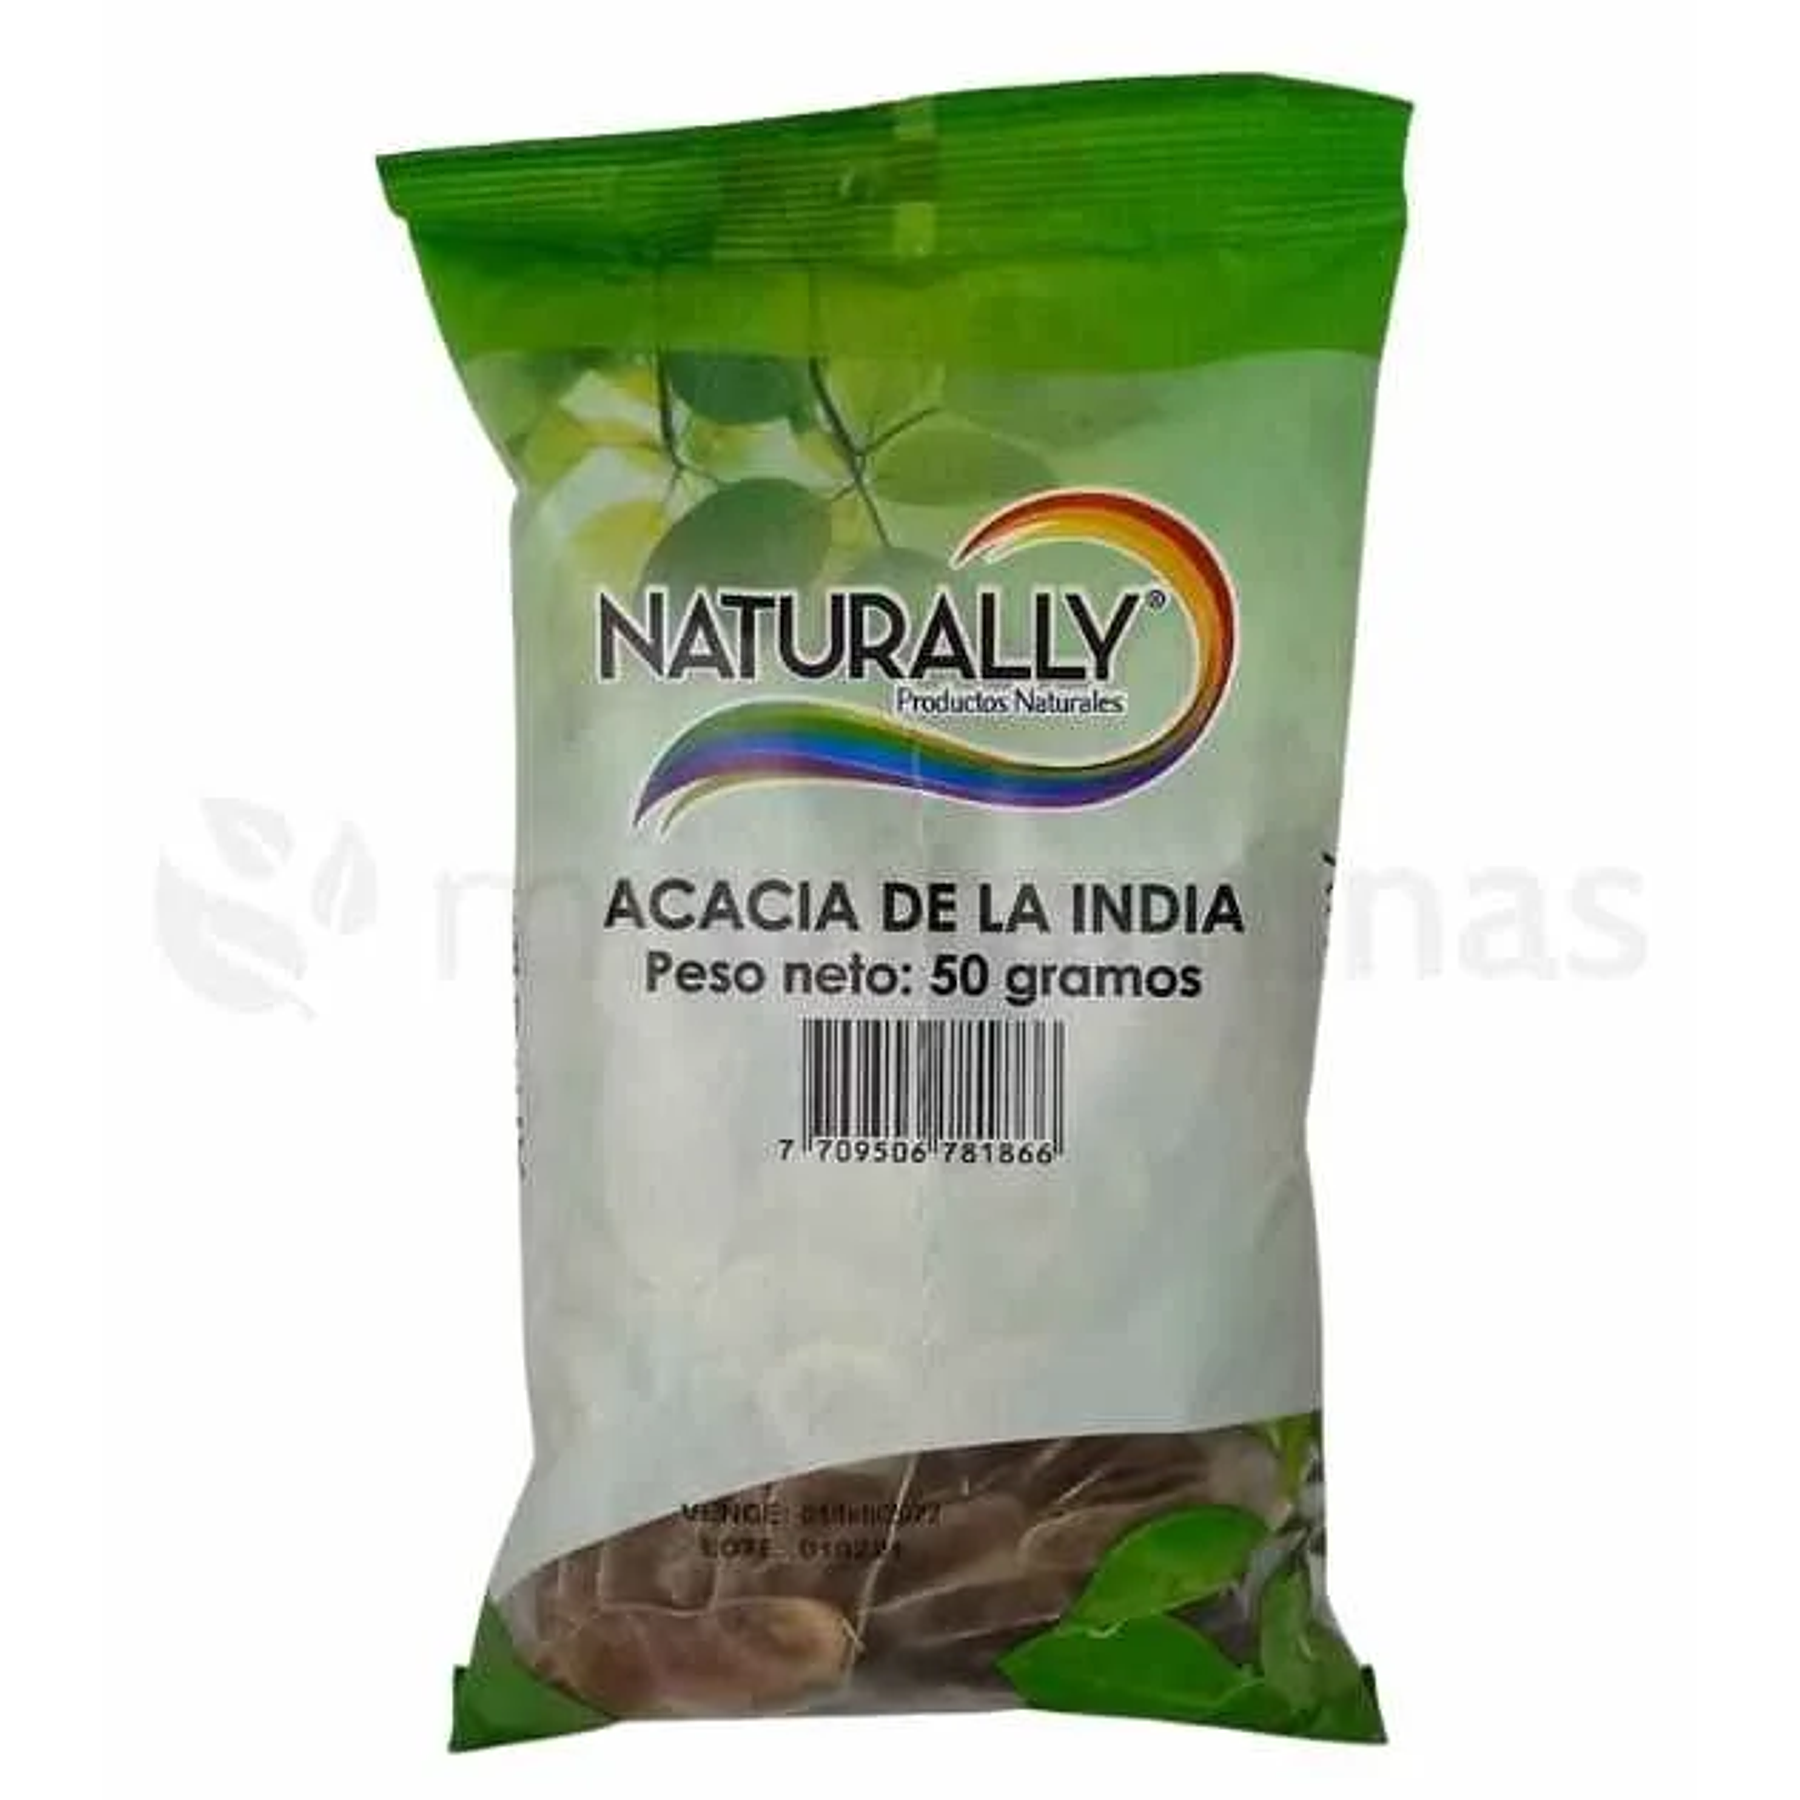 Acacia de la india 50 gramos Naturally 